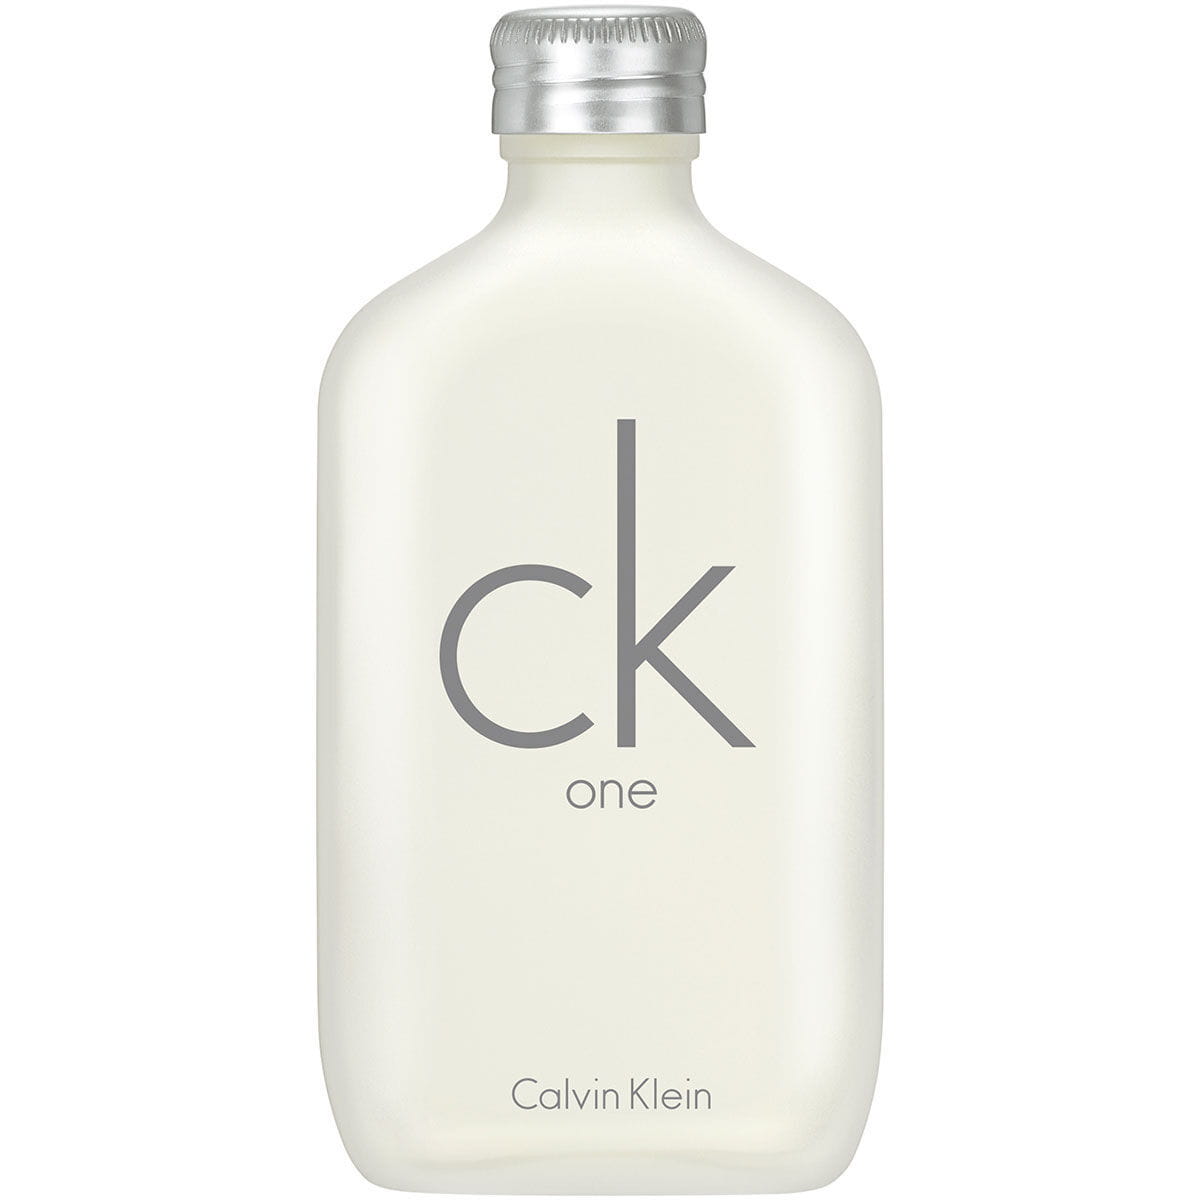 C.K. One - Calvin Klein kvepalai vyrams